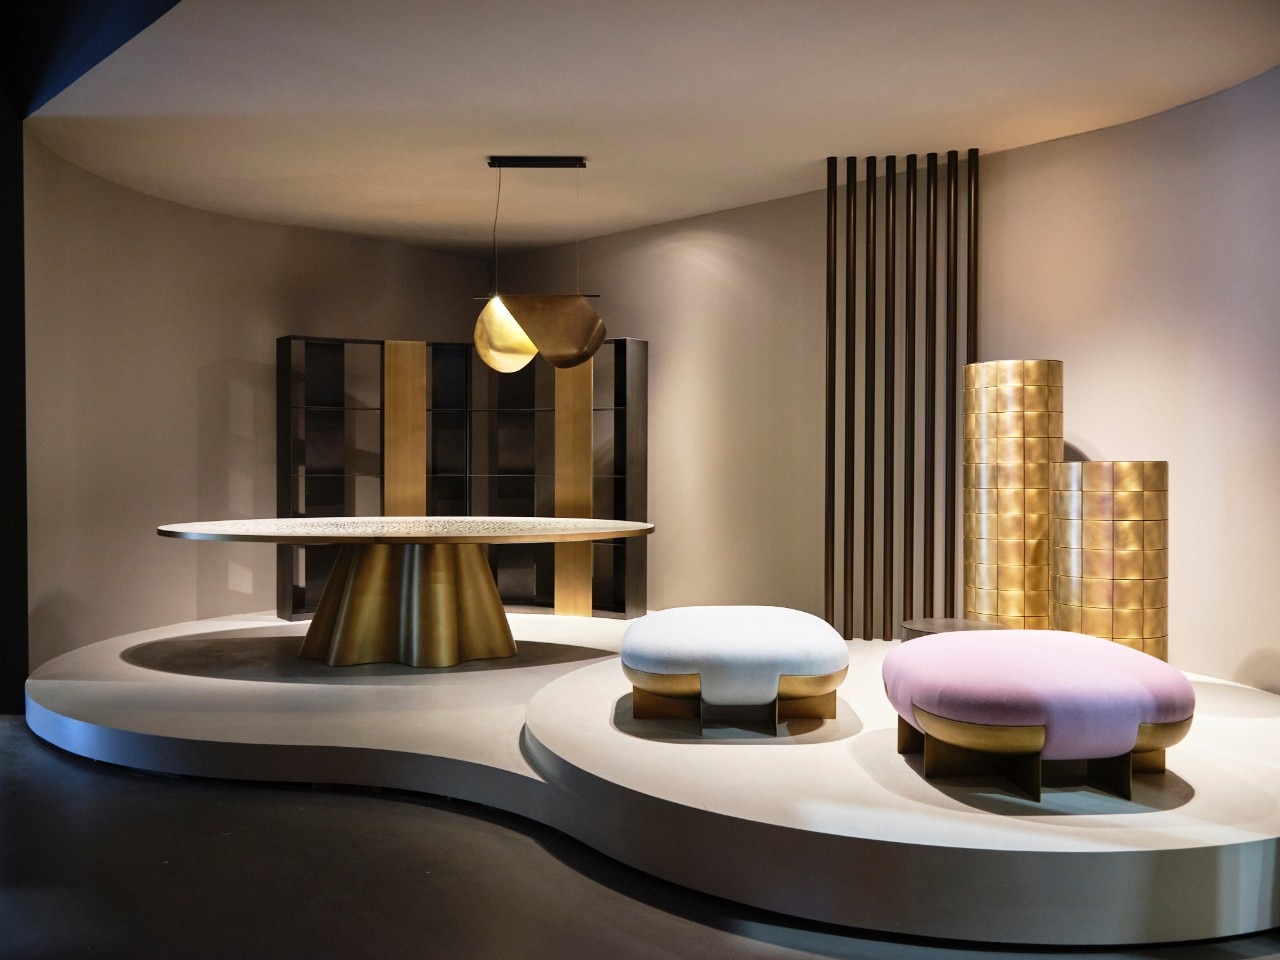 Ten design pieces from the Salone del Mobile 2022 - Domus